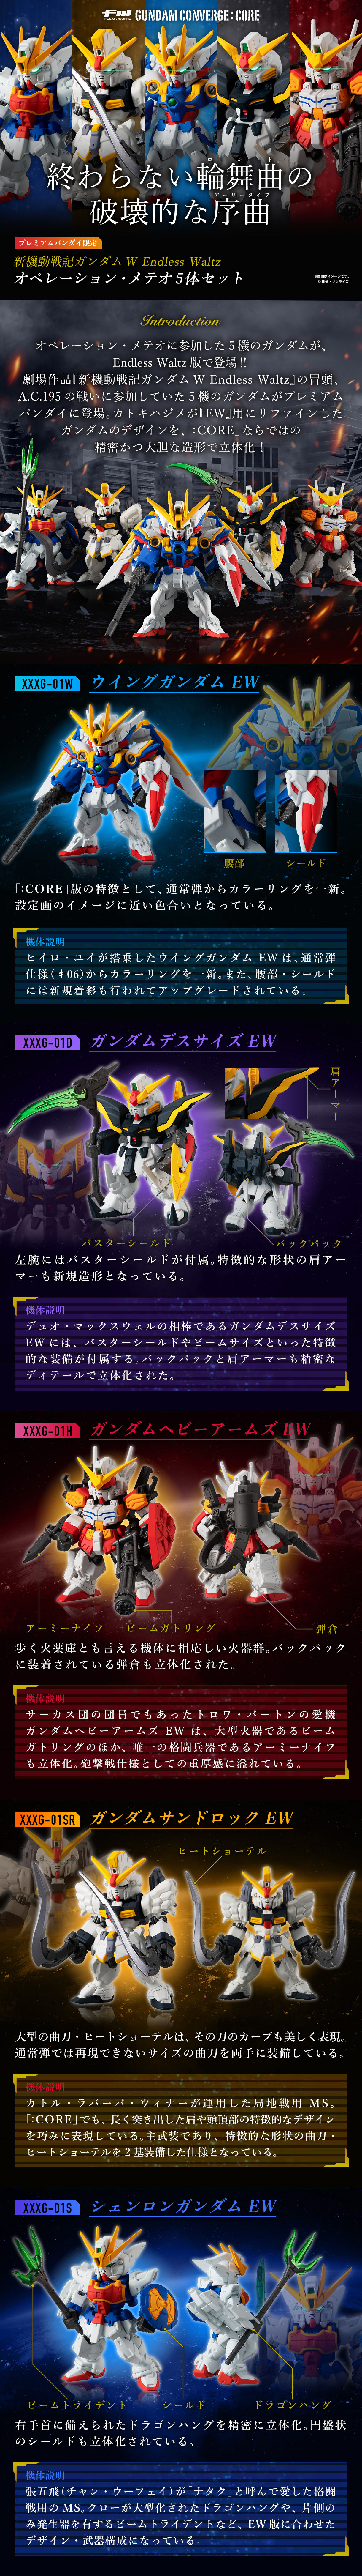 Fw Gundam Converge Core 新機動戦記ガンダムw Endless Waltz オペレーション メテオ 5体セット プレミアムバンダイ限定 新機動戦記ガンダムw 趣味 コレクション バンダイナムコグループ公式通販サイト